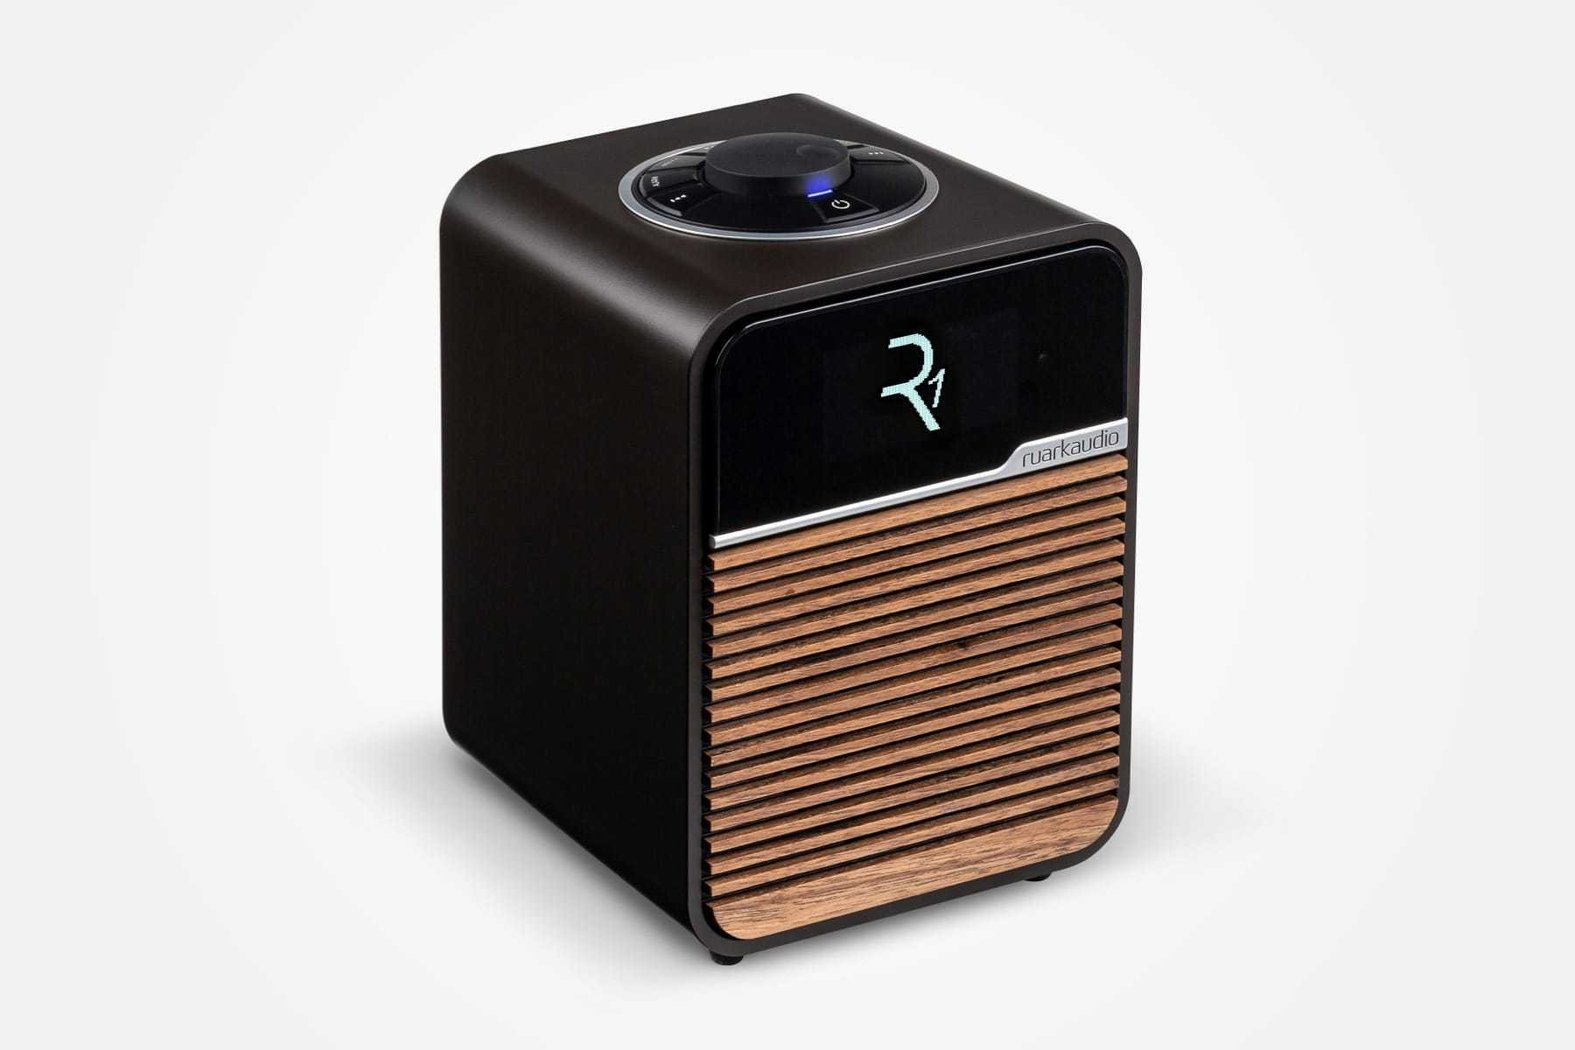 Ruark Audio R1 Deluxe Bluetooth radio